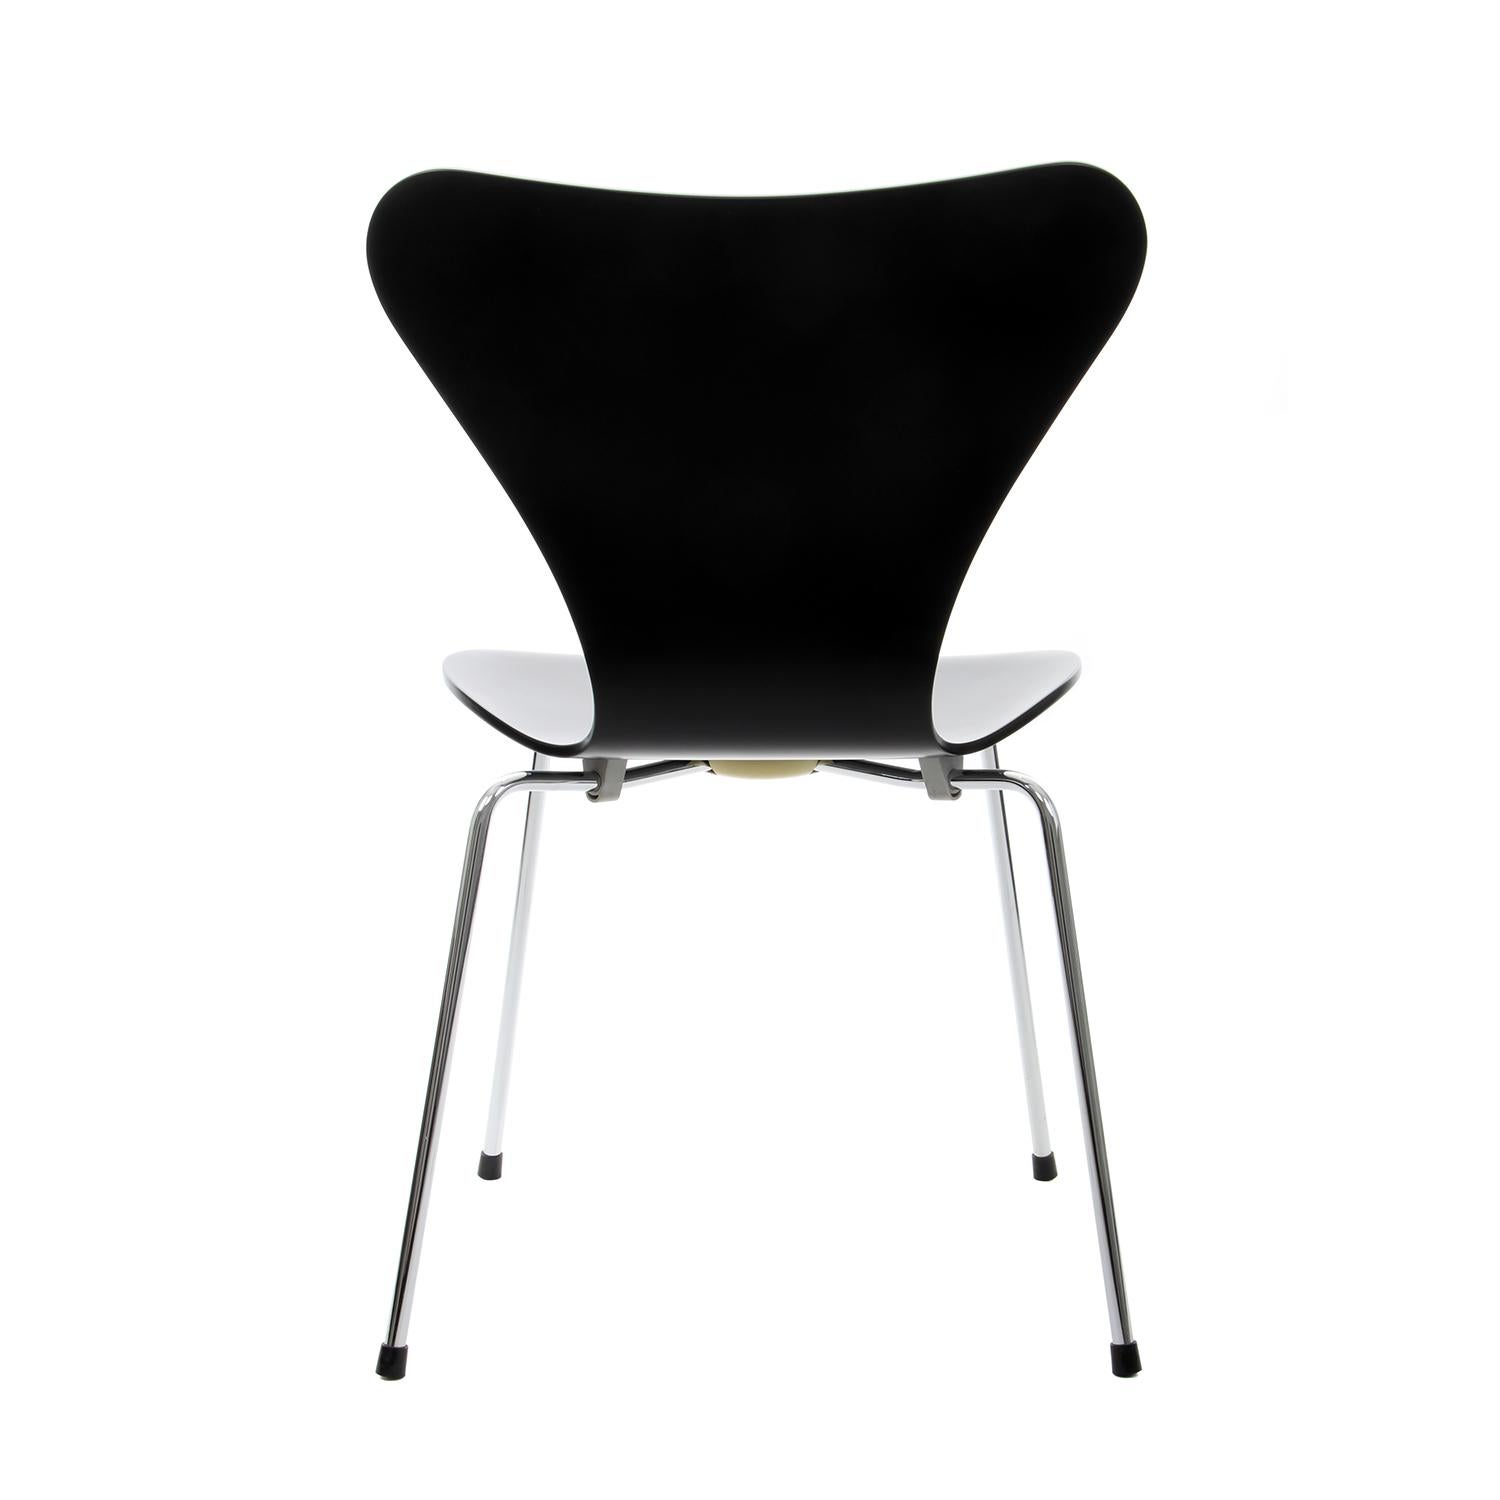 Danish Series 7 Black Chair by Arne Jacobsen for Fritz Hansen in 1955